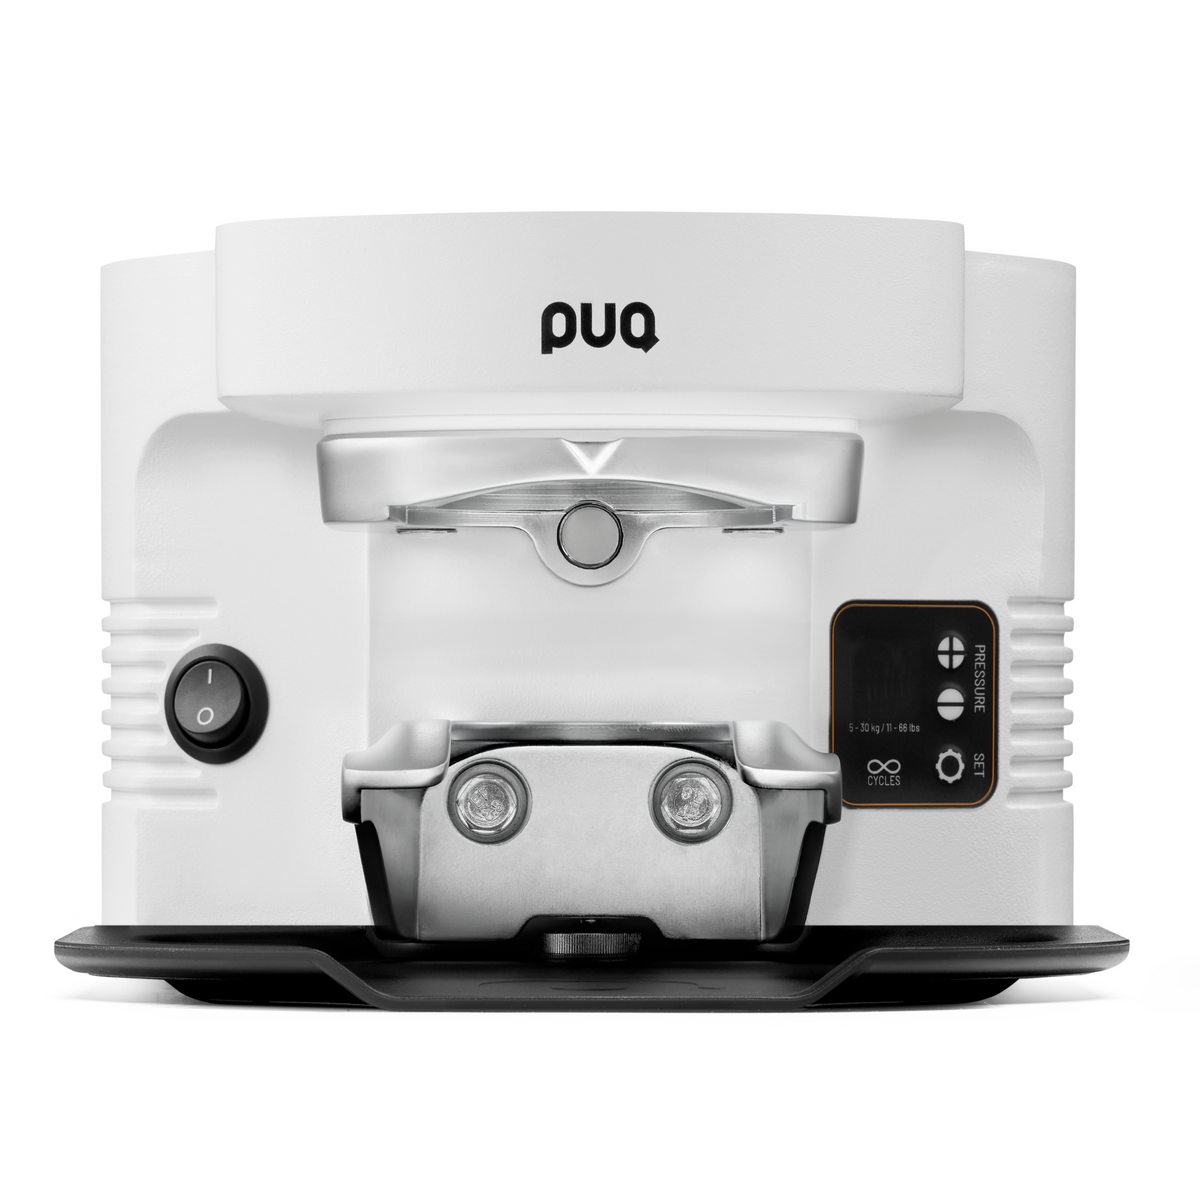 Puqpress Gen 5 M3 - 适用于 Mahlkonig E65S 和 E65S GBW 研磨机的自动咖啡捣压器